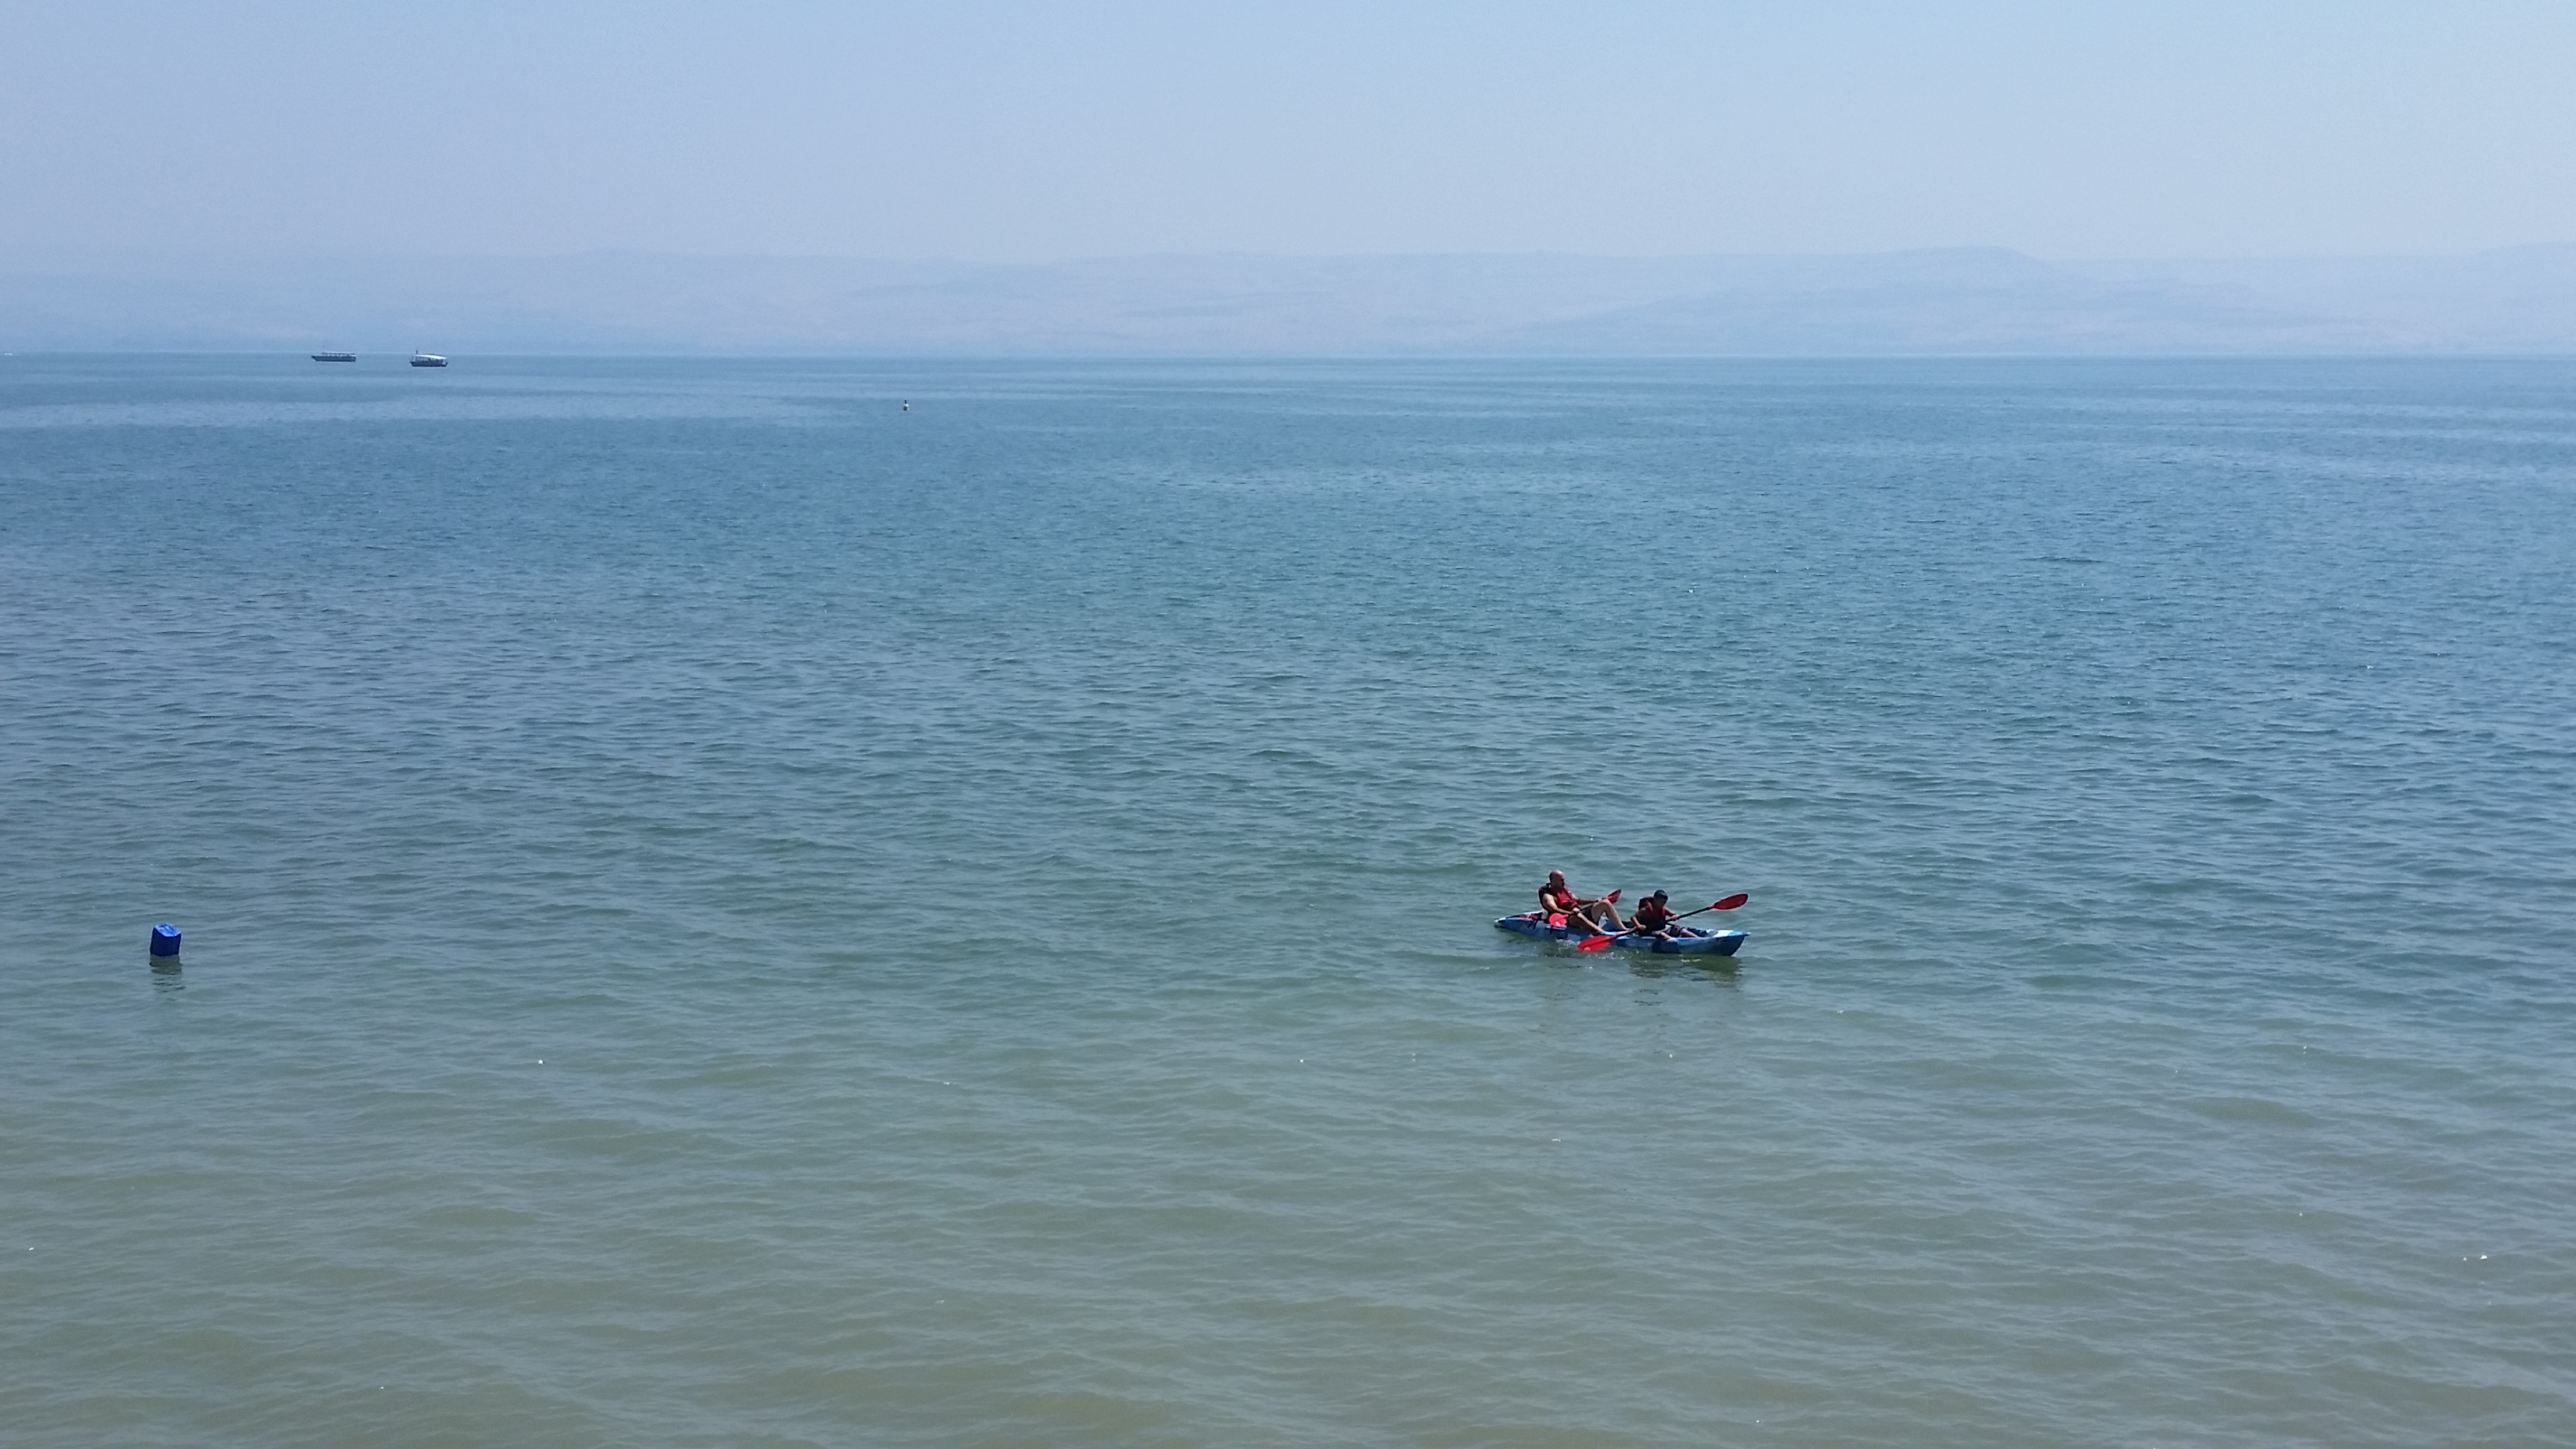 Genosar- Sea of Galilee shore
Геносар- брега на Галилейското езеро